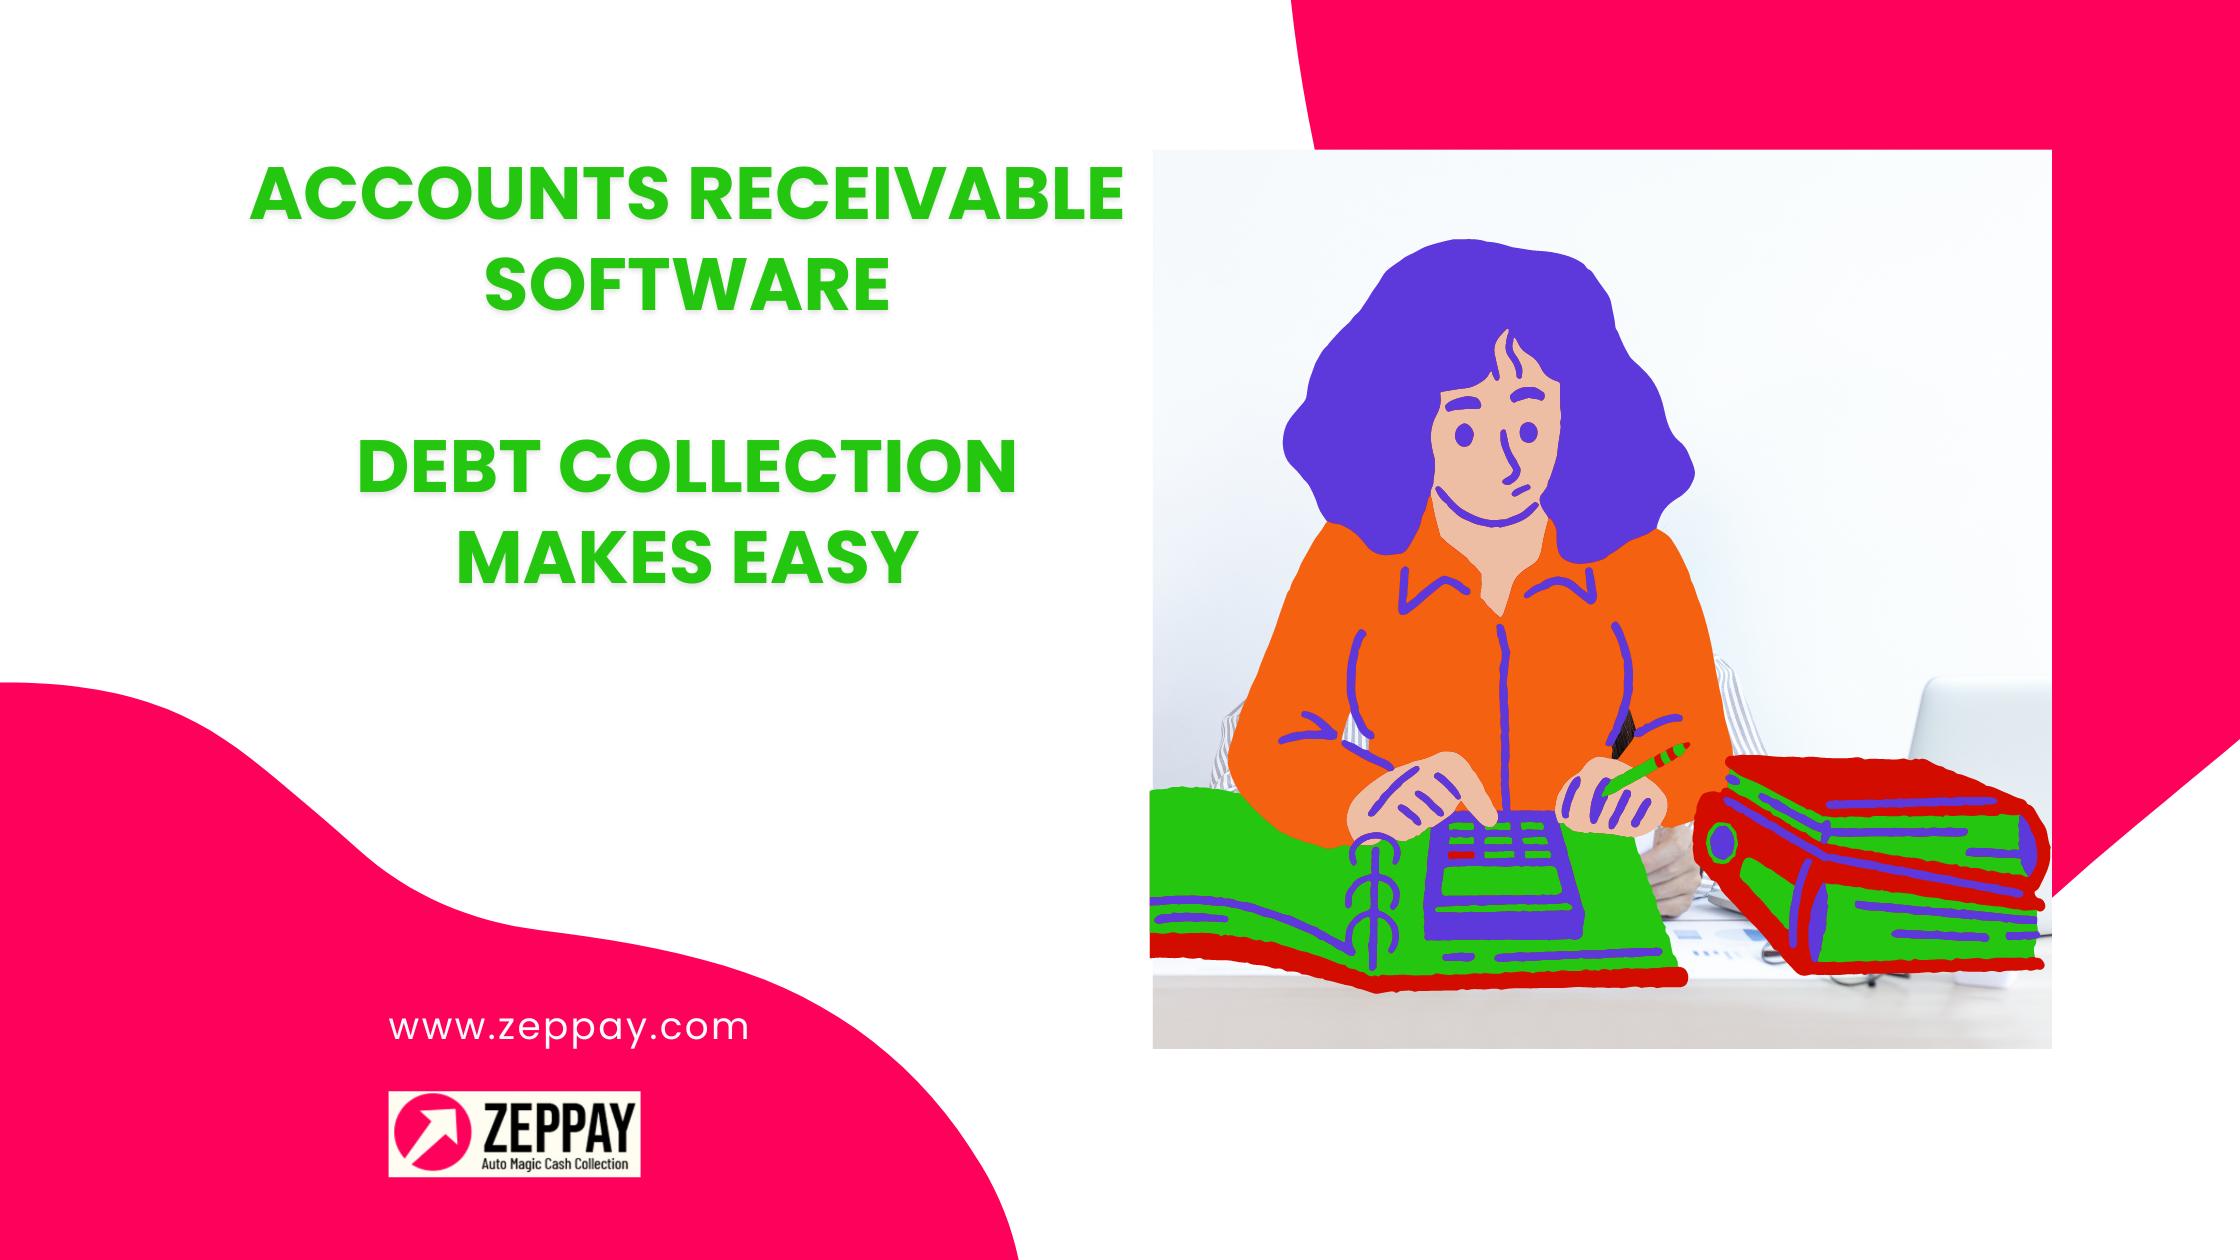 Accounts Receivable Software - Zeppay Debt Collection Makes Easy